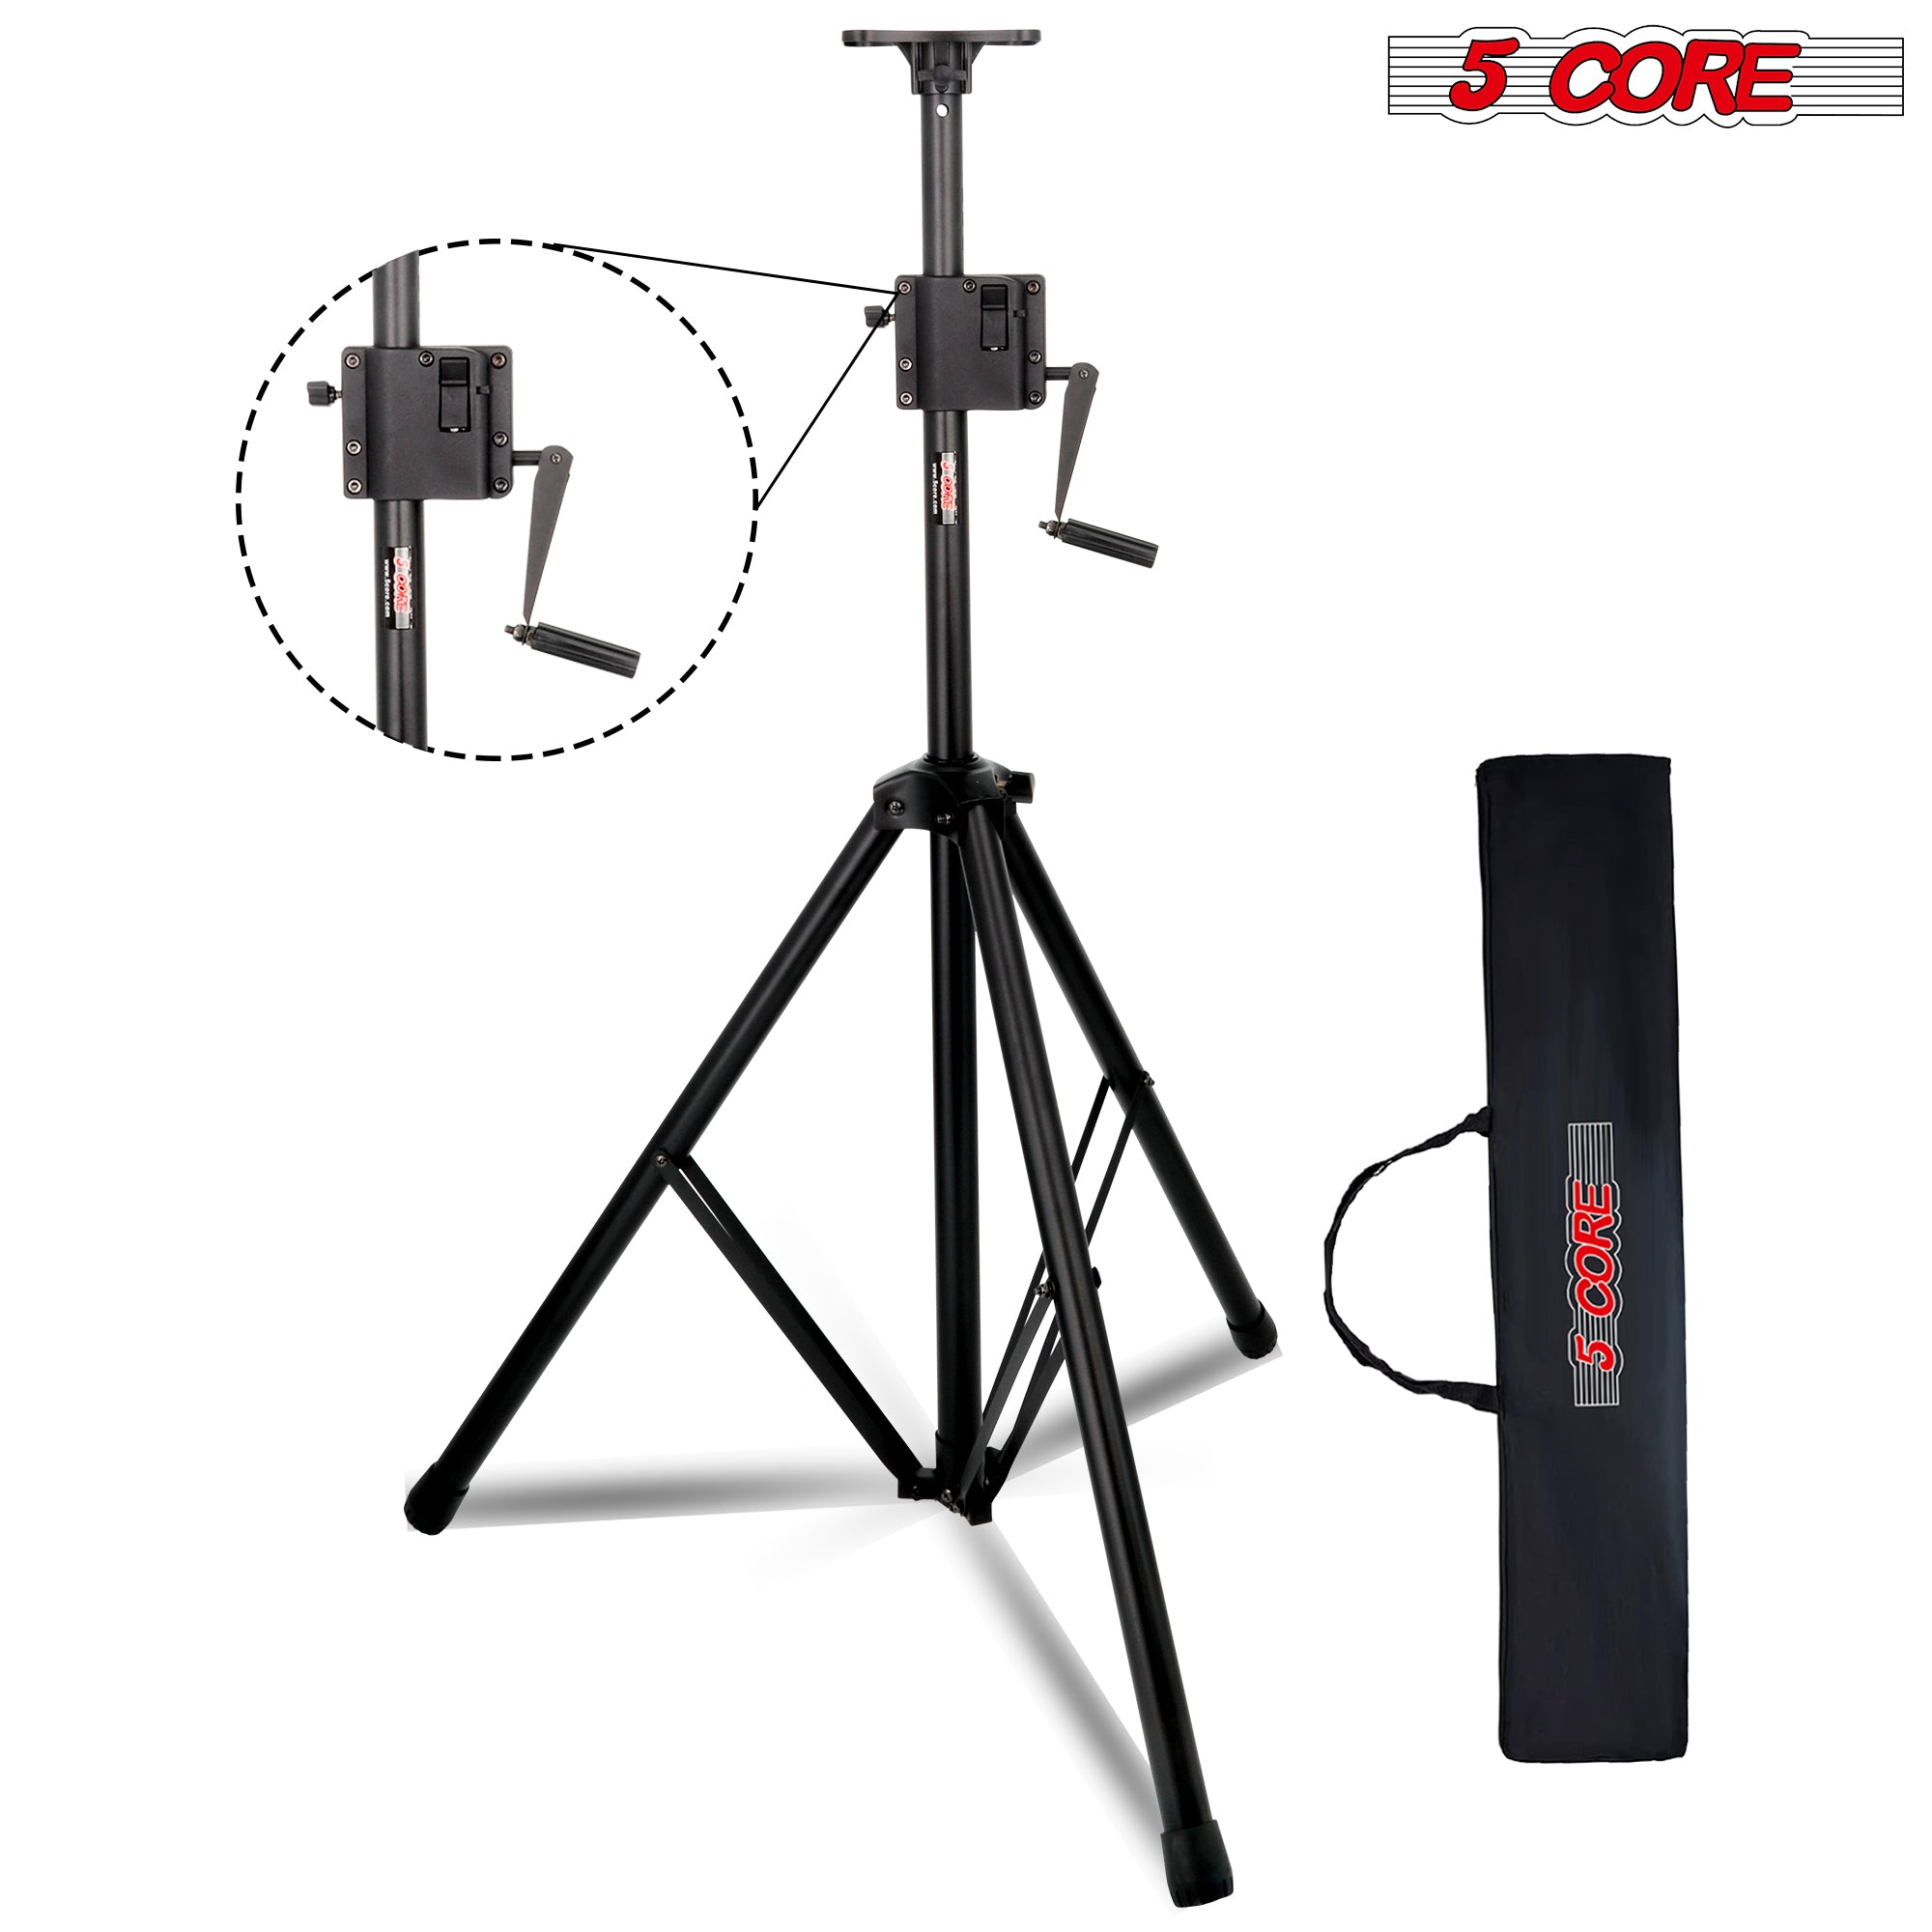 5 Core Crank Up Speaker Stand Tripod DJ Studio Monitor Stands 6ft-10 185LB Capacity 1/2 Pc